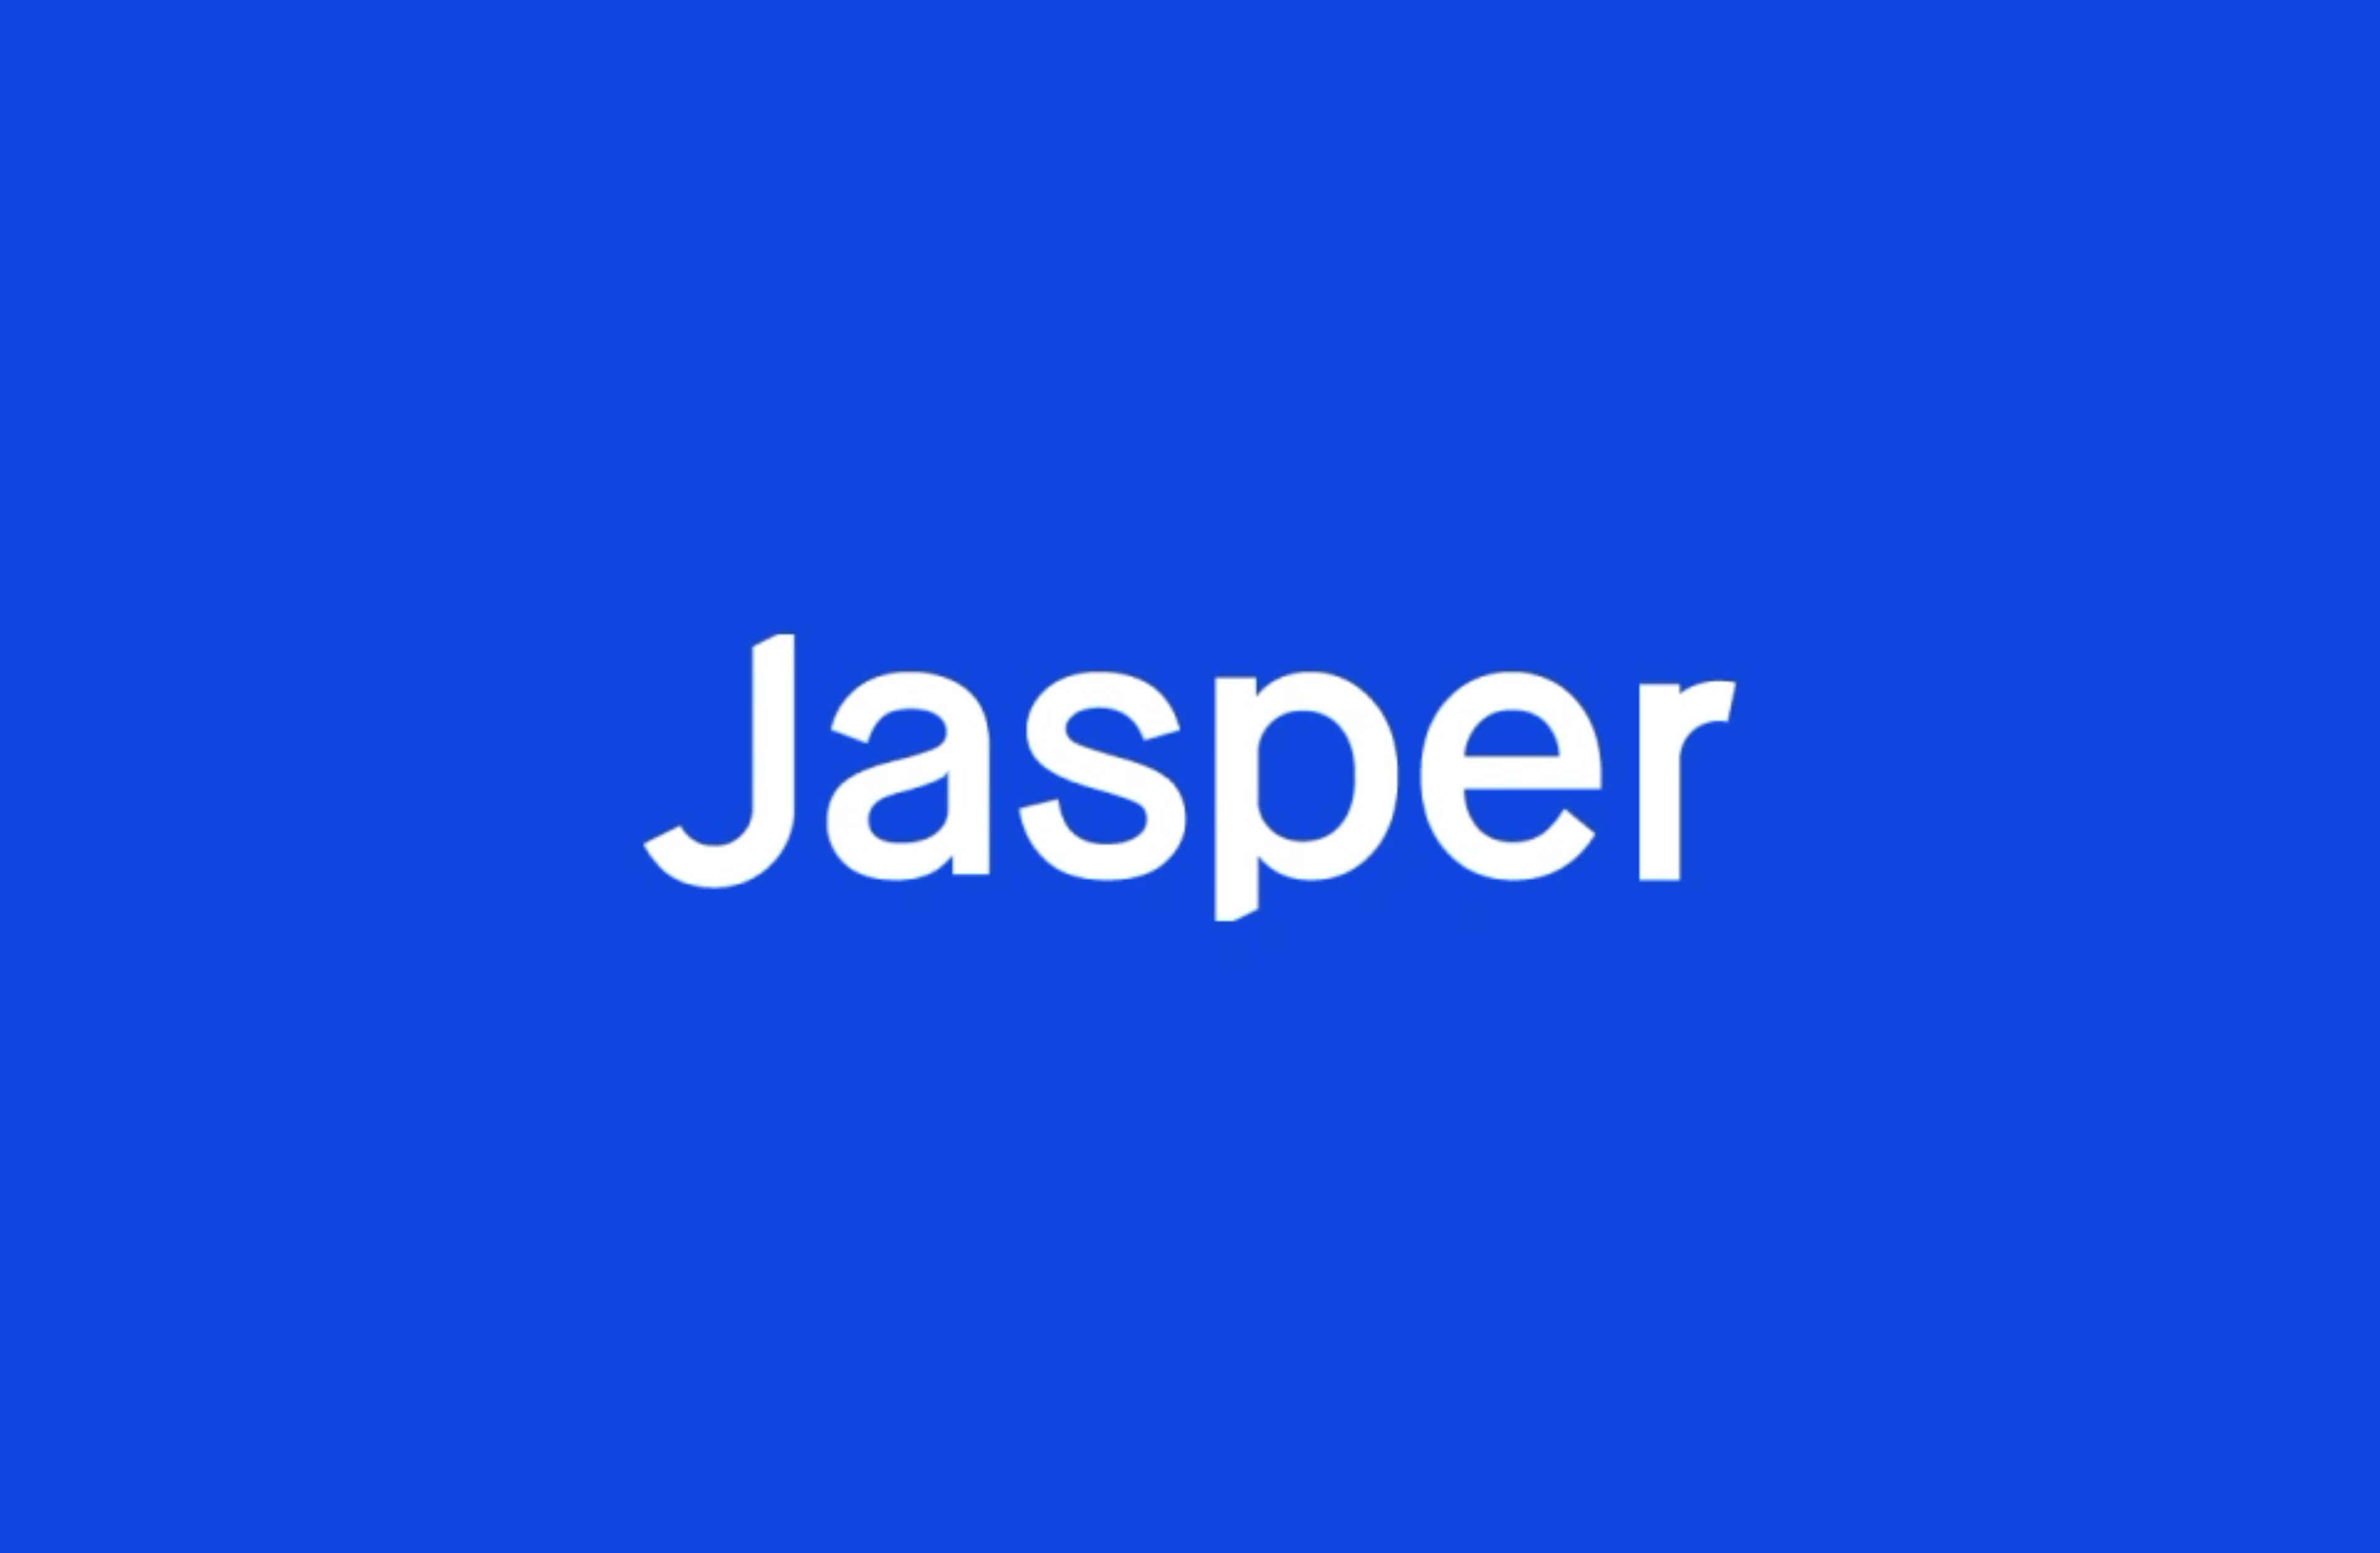 Jasper raises $2.3M seed funding